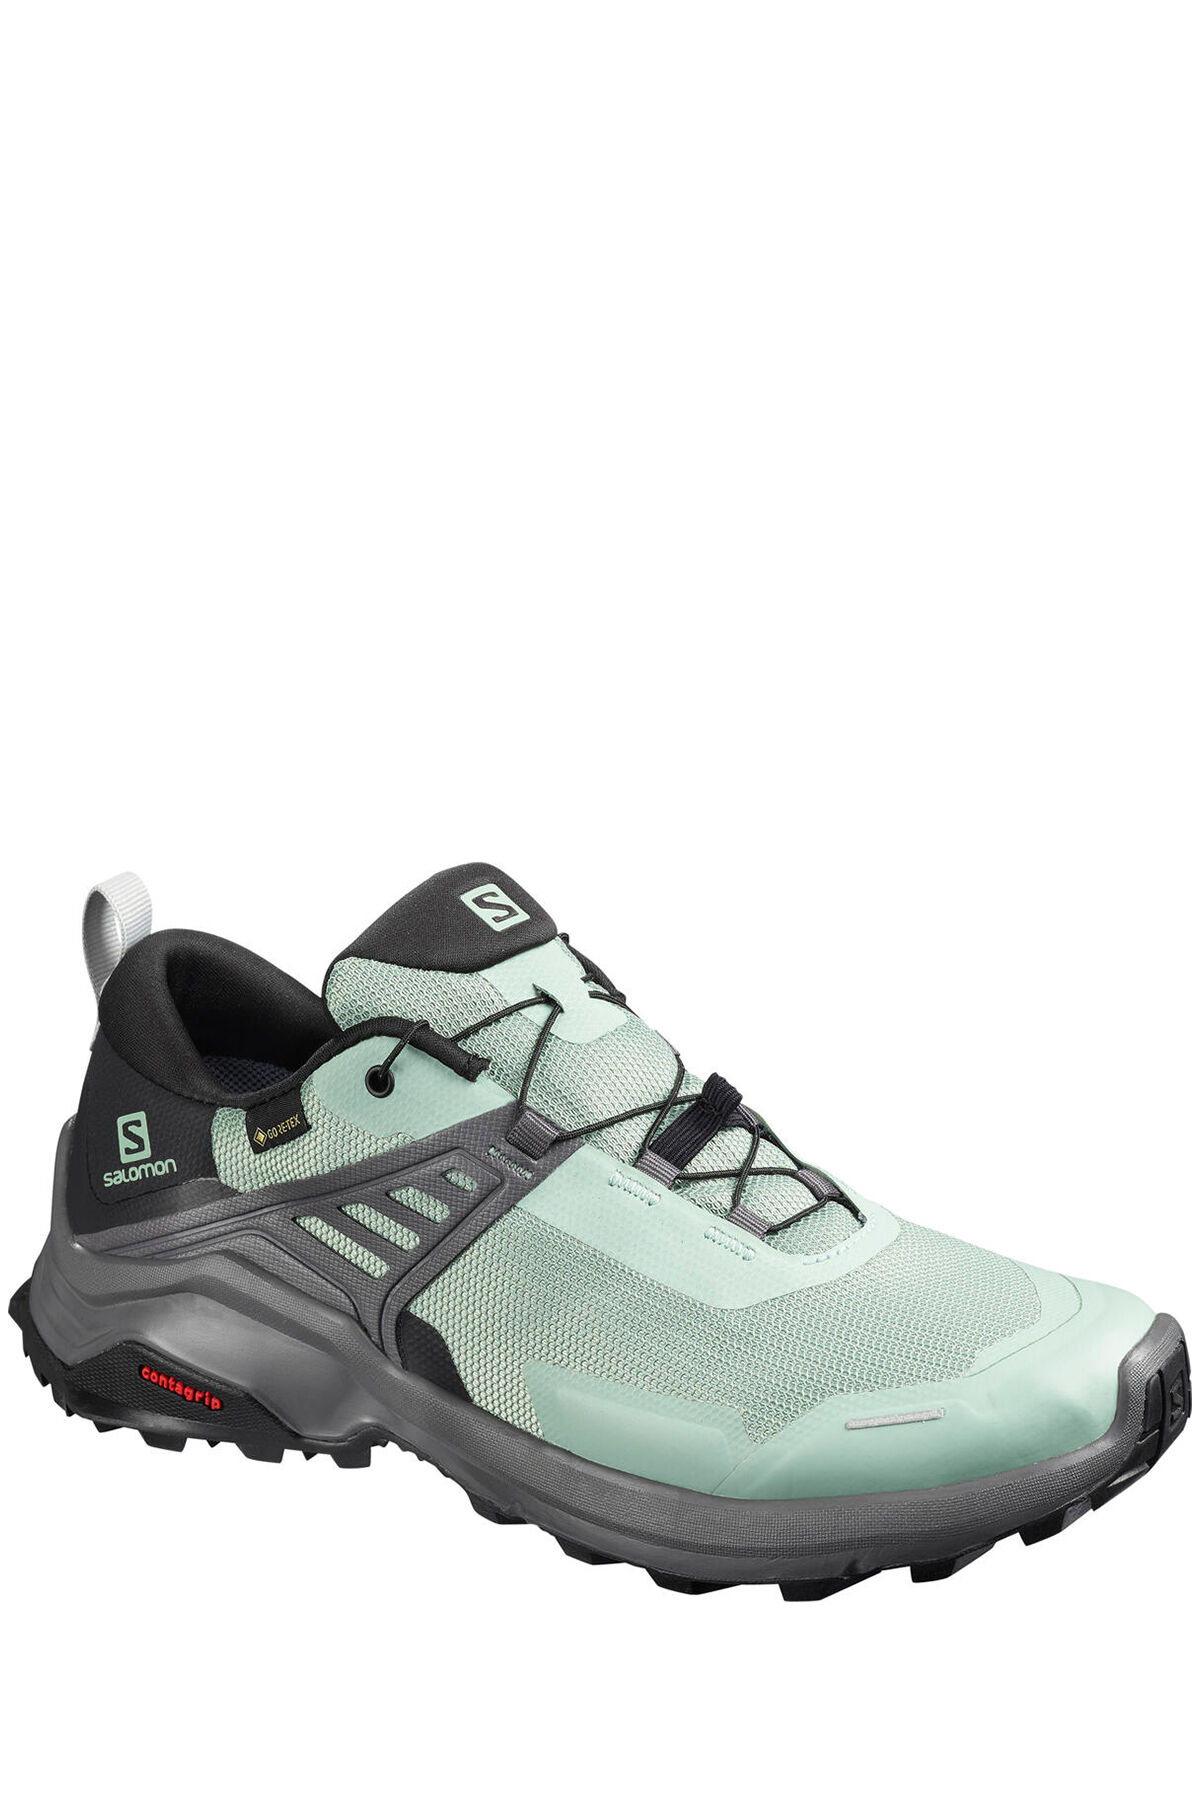 Salomon X Raise GTX Hiking Shoes 